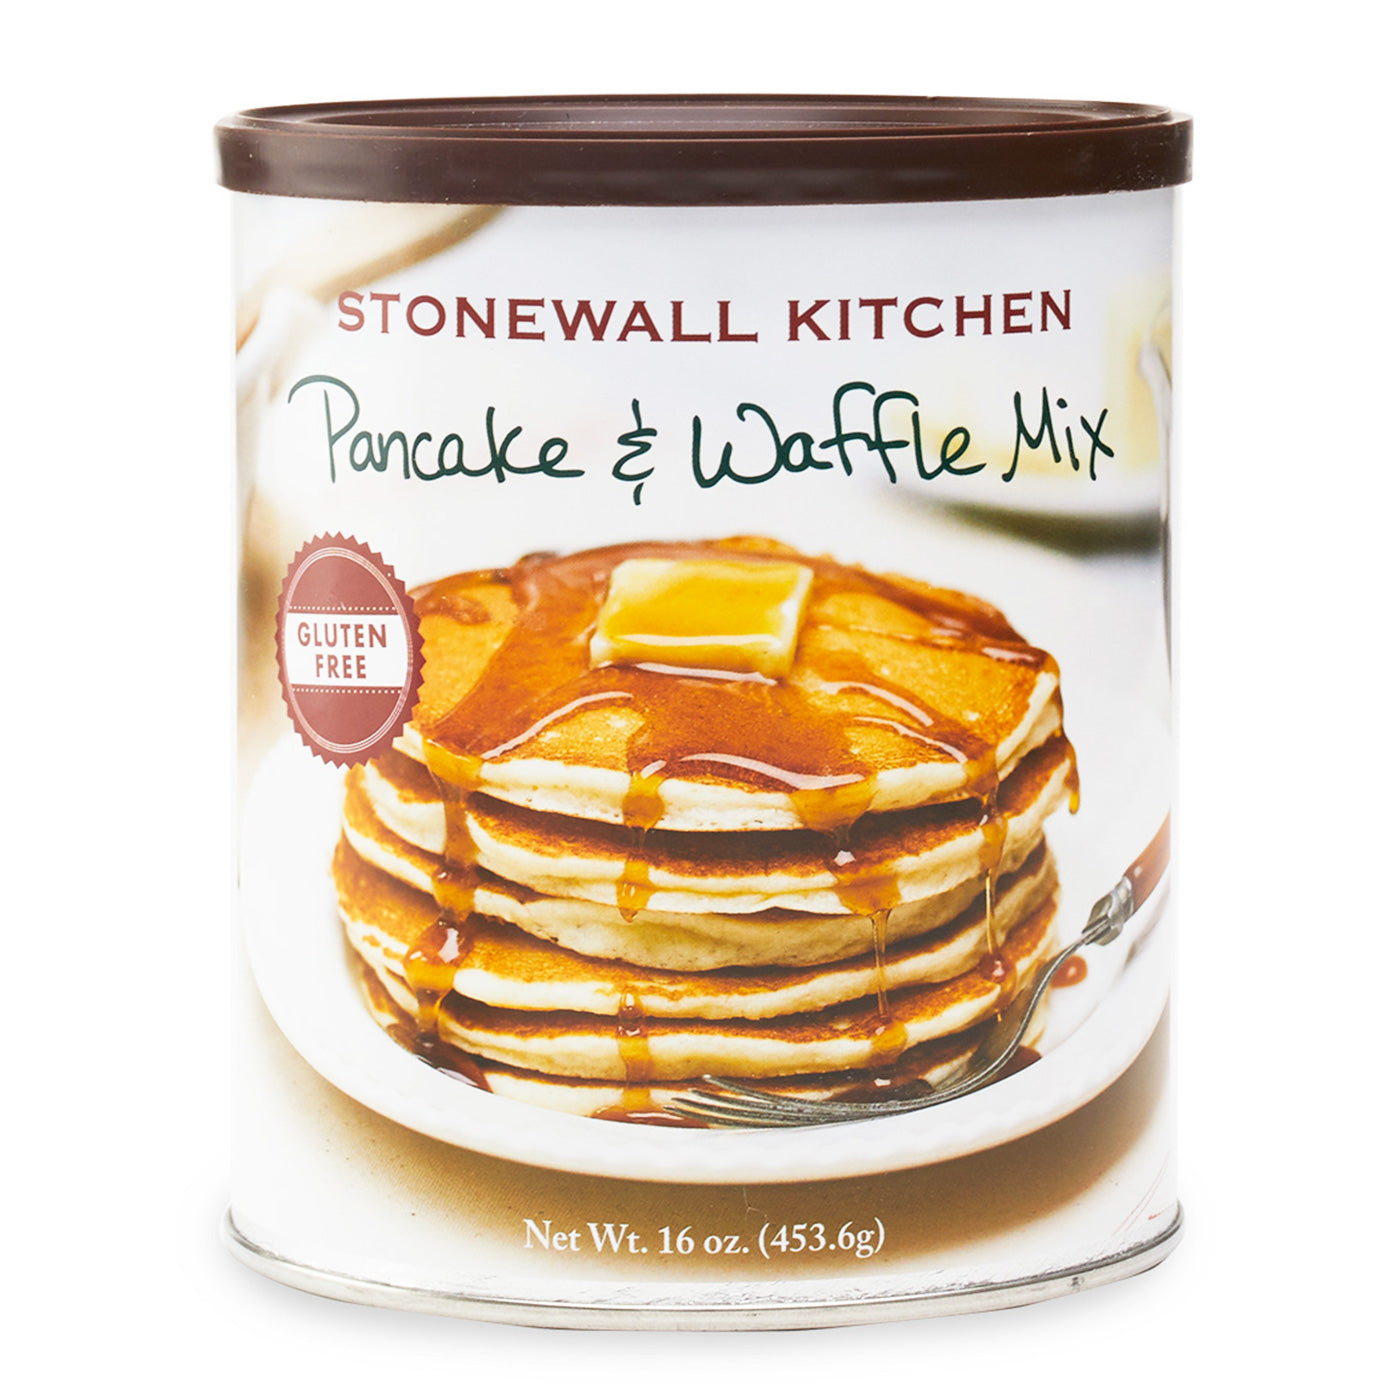 Stonewall Kitchen Gluten Free Pancake and Waffle Mix - Olive Oil Etcetera 